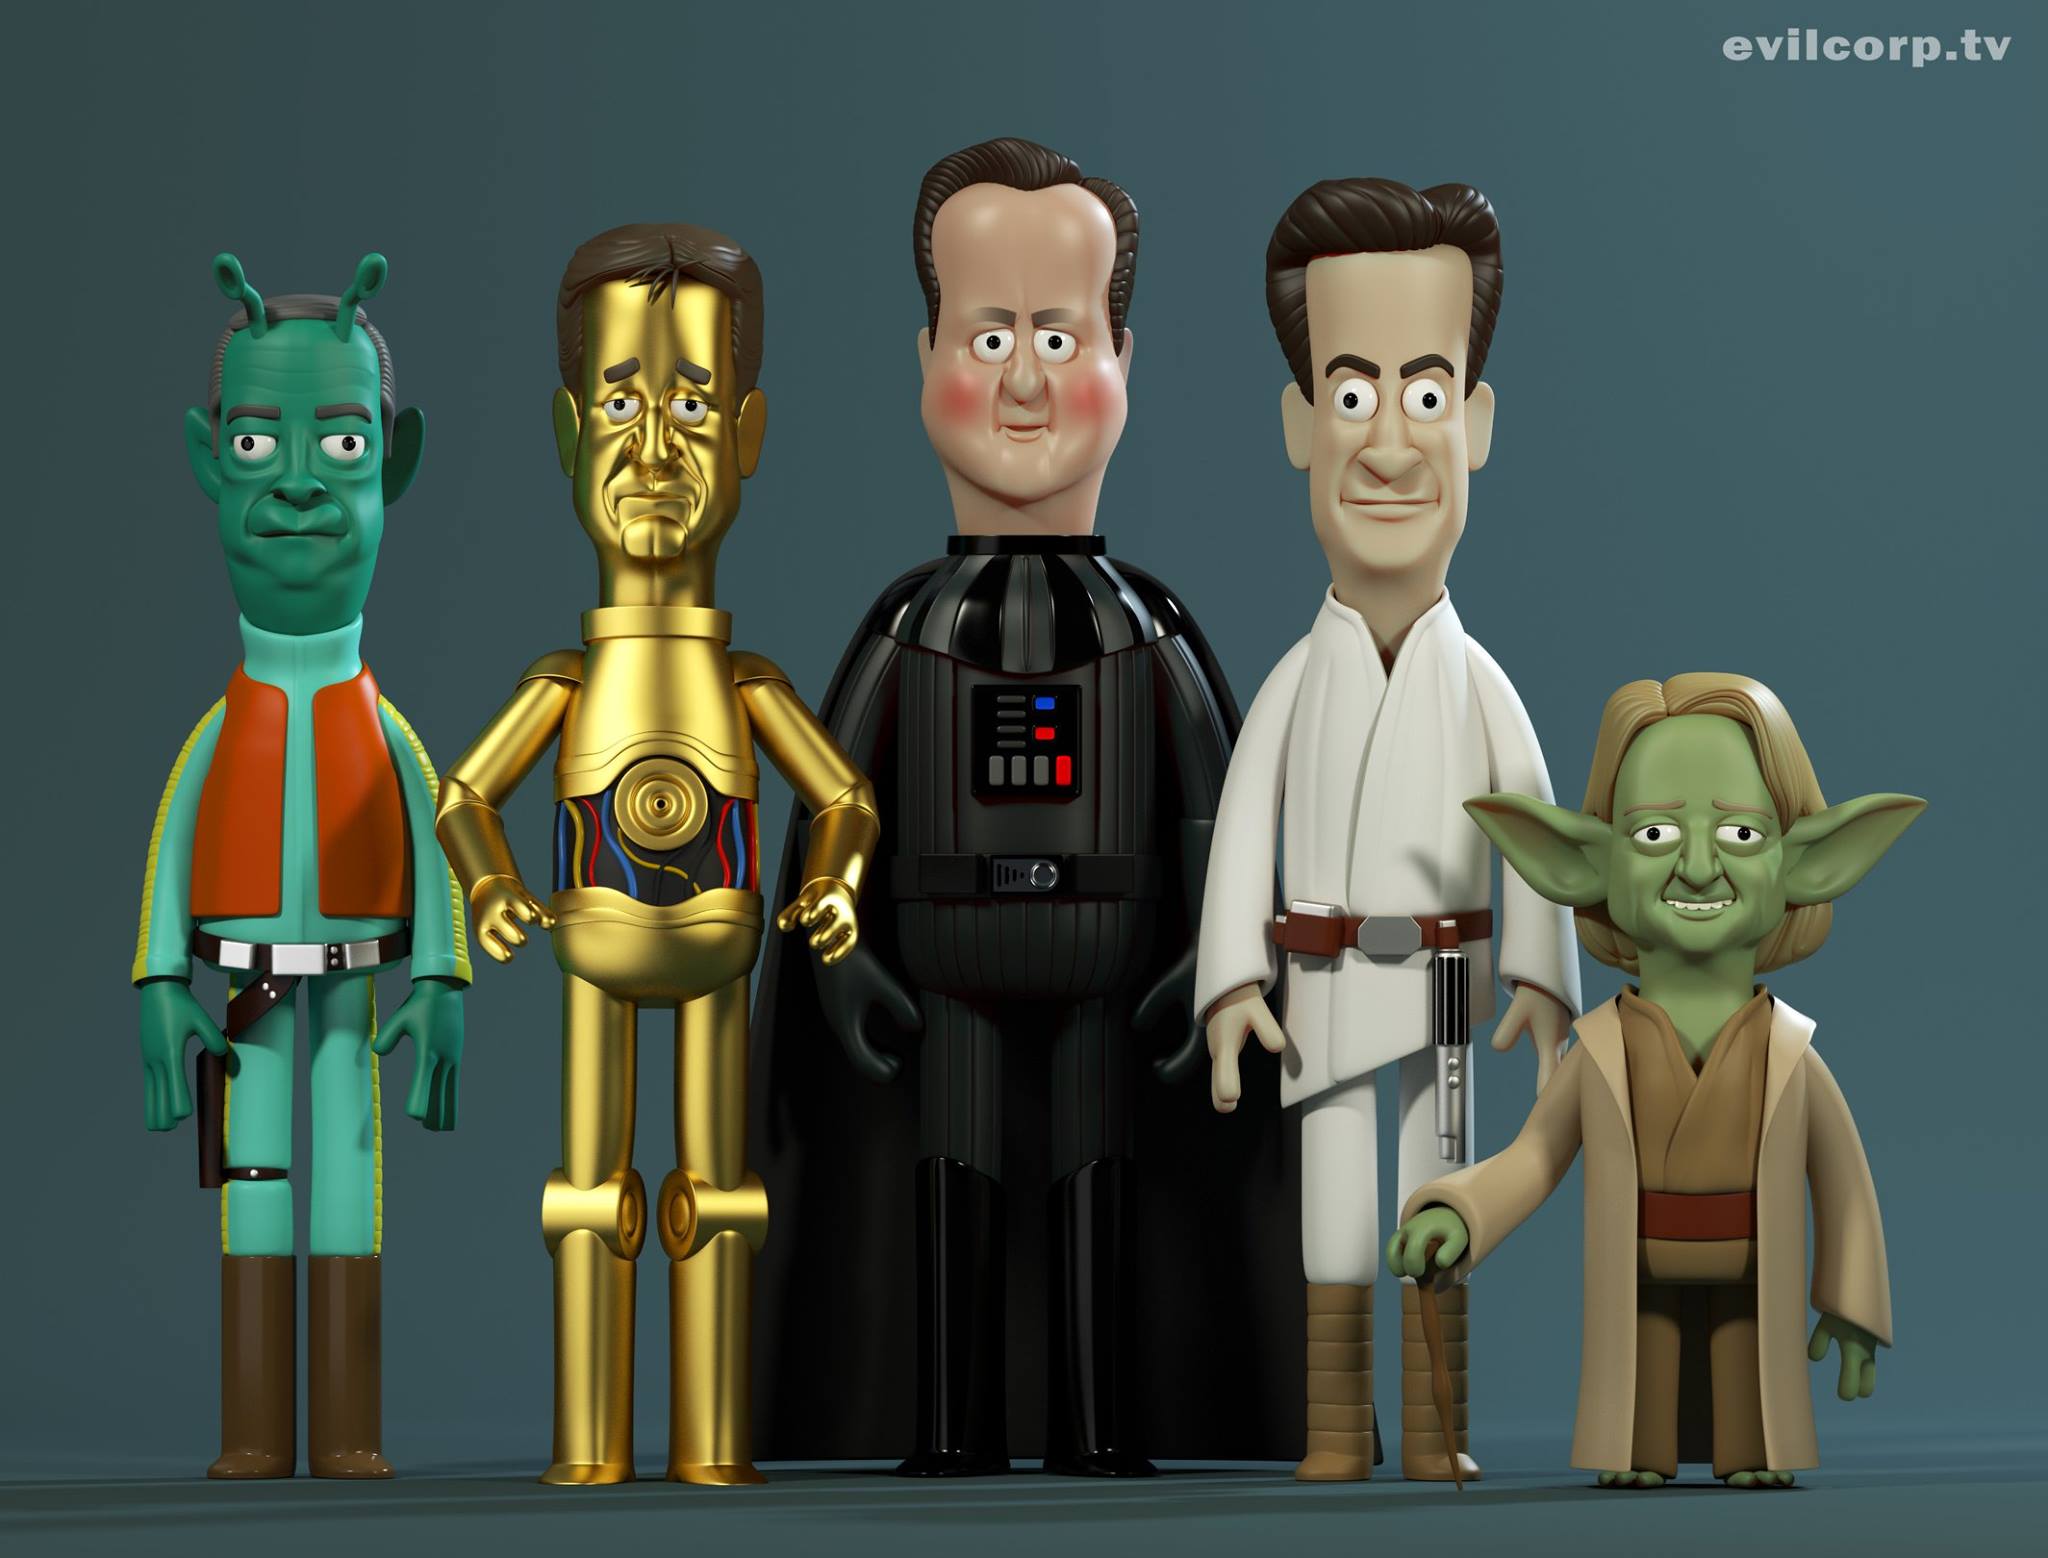 A Large Evil Corporation Star Wars UK leaders electon